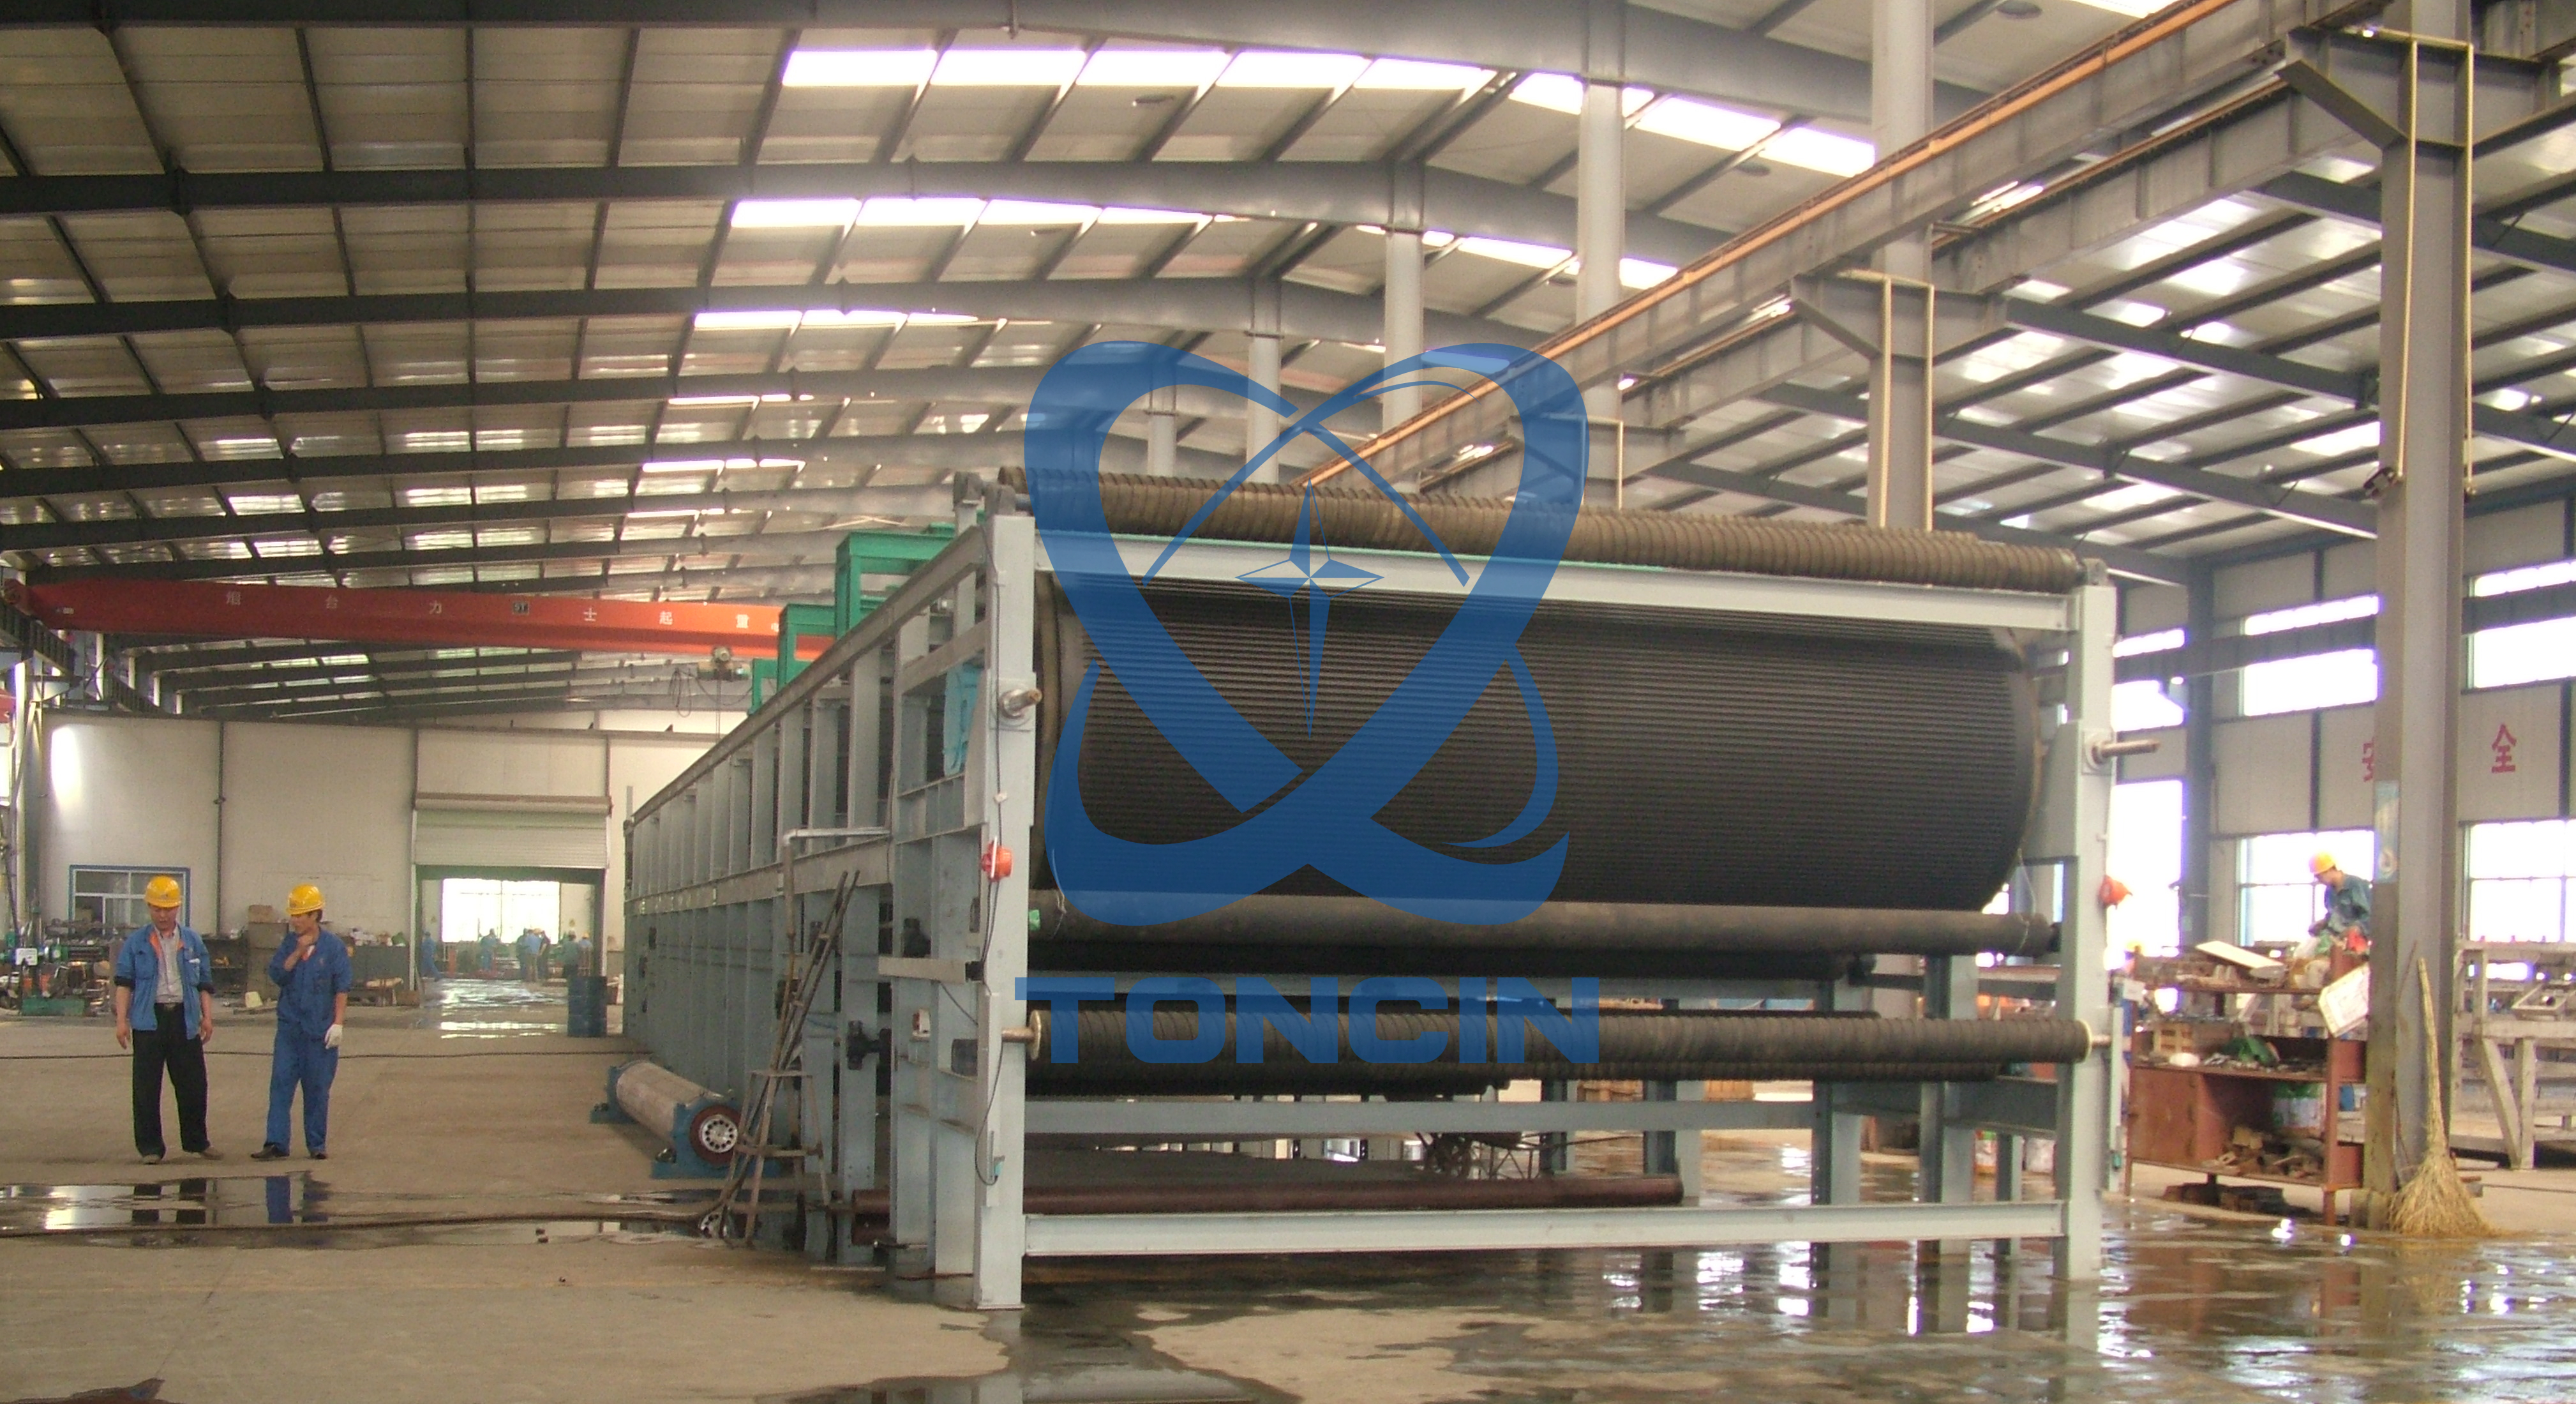 Flotation Tailing Processing Manufacturer Supply Vacuum Belt Filter